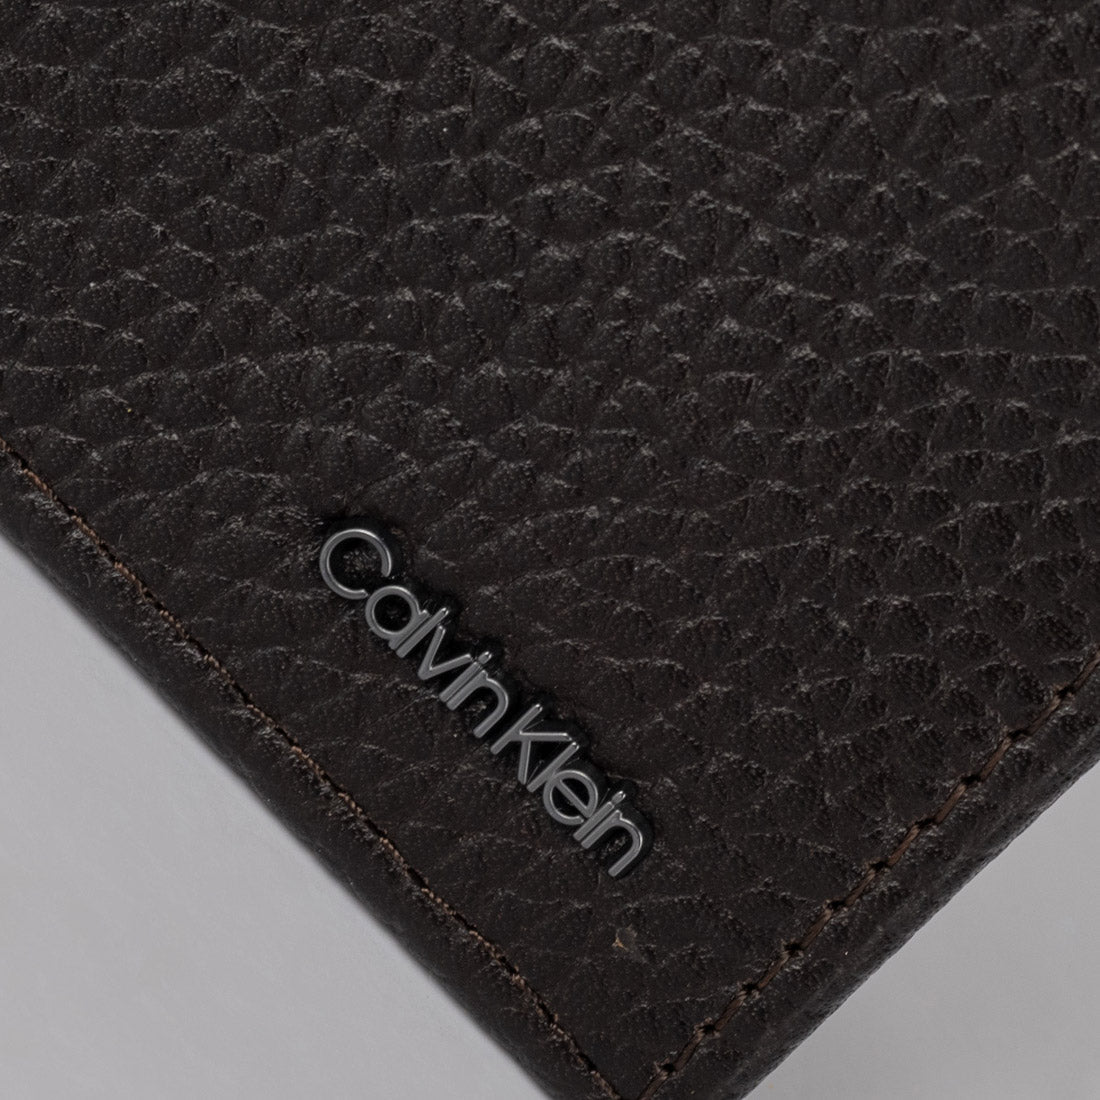 Calvin Klein Brand New Wallet - mymadstore.com